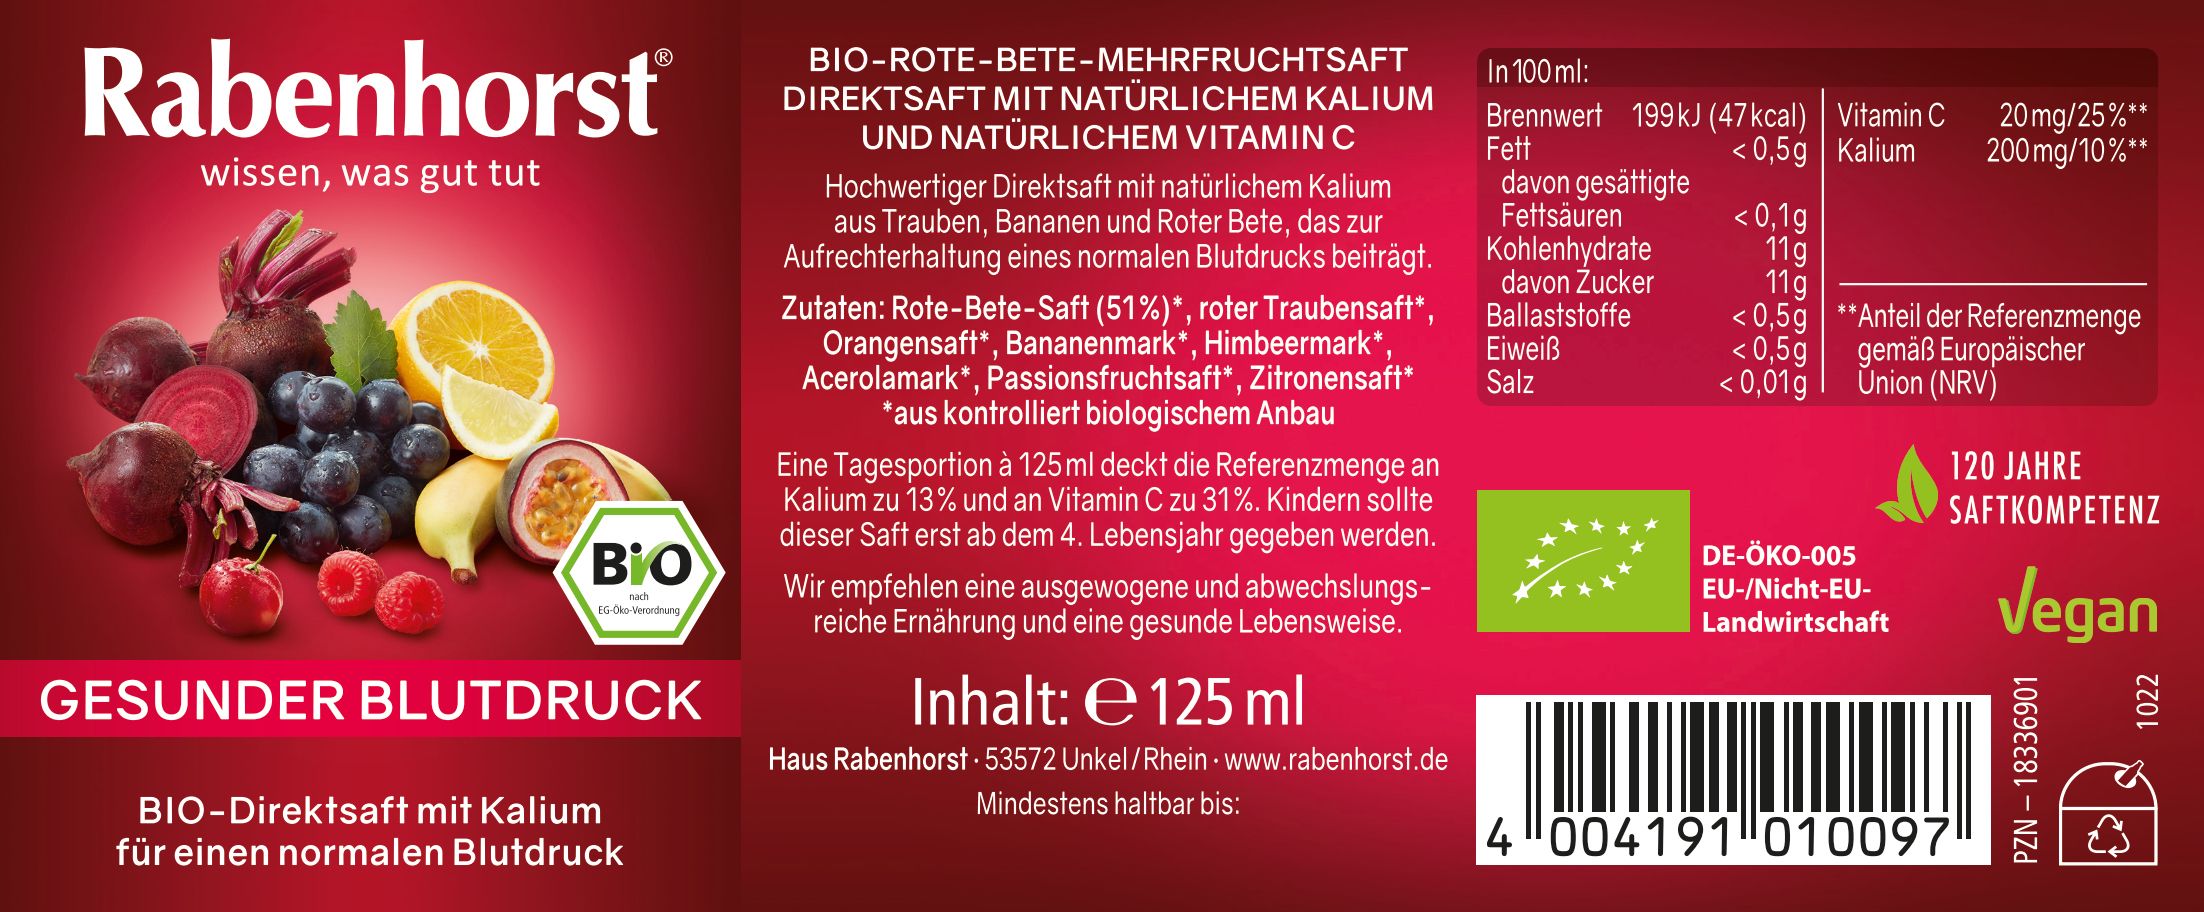 Rabenhorst Gesunder Blutdruck BIO Mini